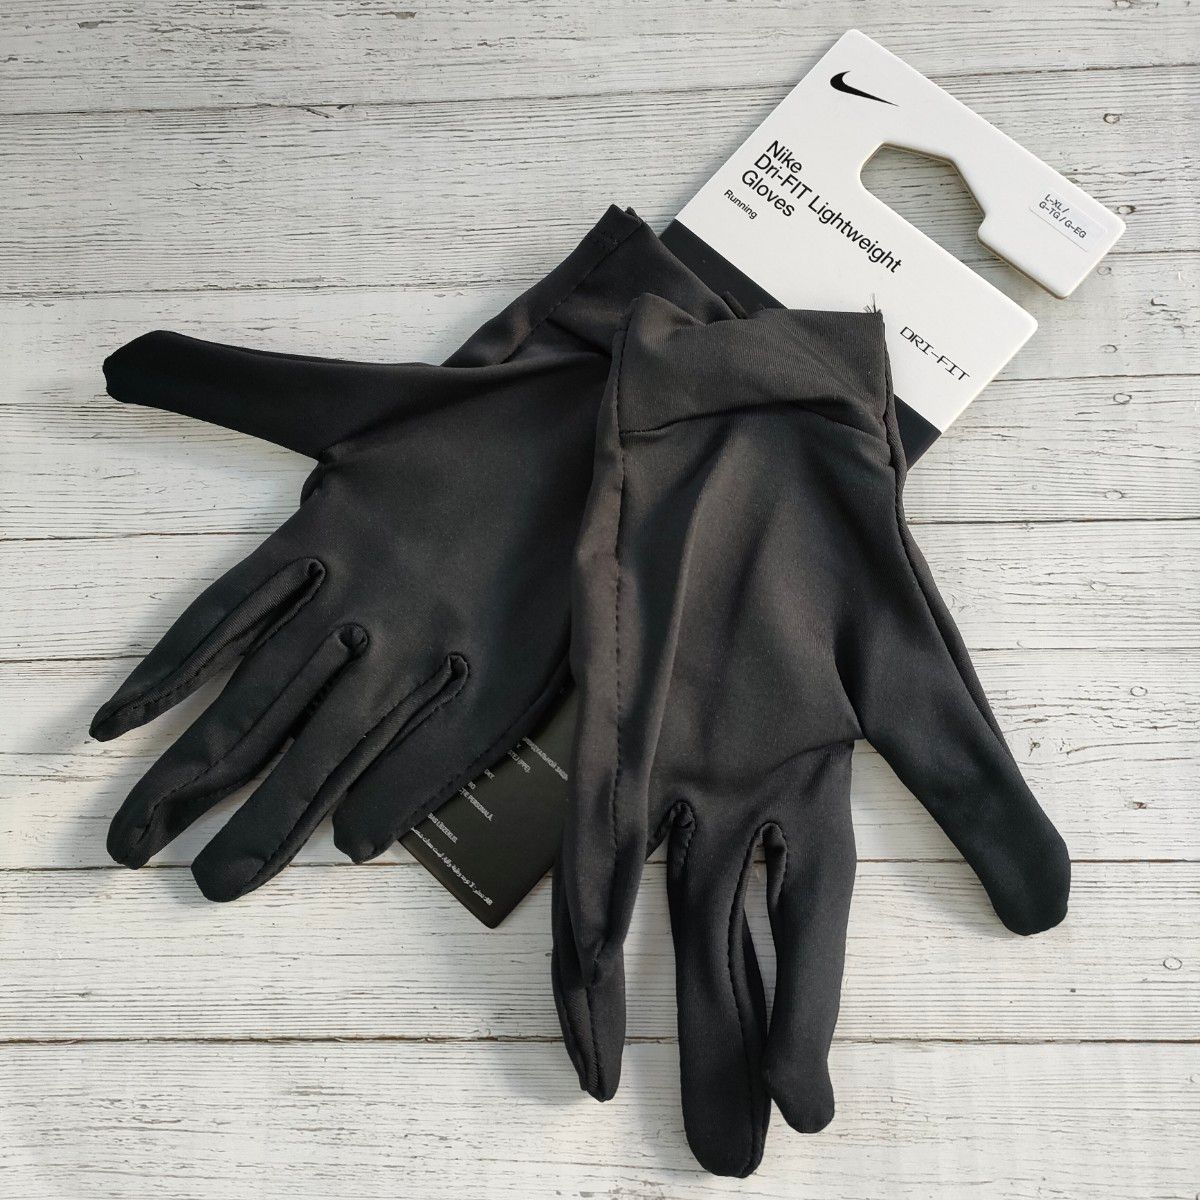 【L/XLサイズ】 NIKE ナイキ グローブ 手袋 ブラック ランニング サッカー マラソン 陸上 防寒対策　アウトドア